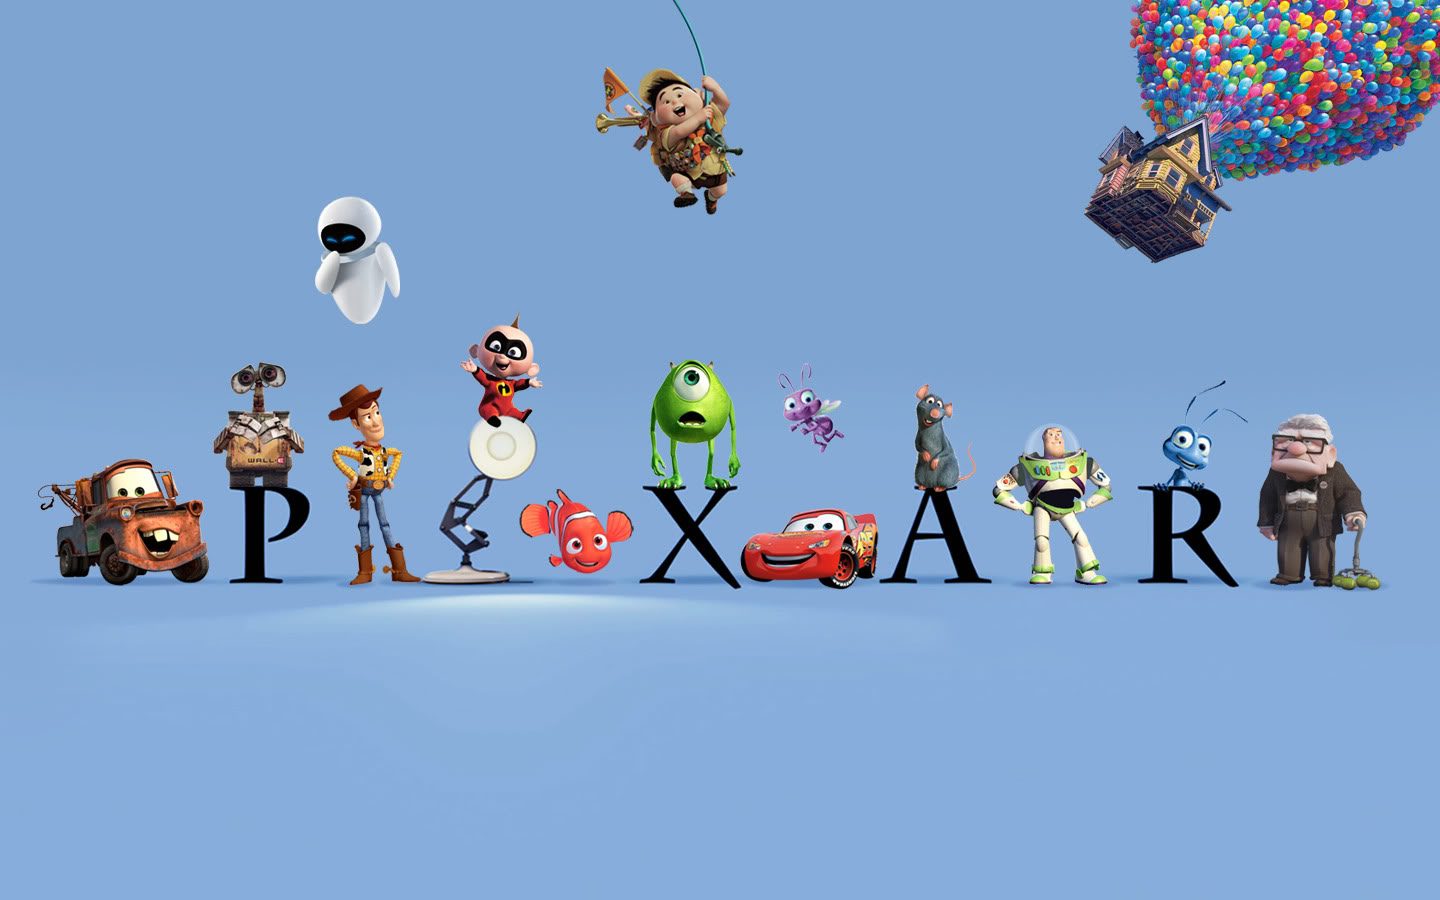 Is Pixar Making a Musical?